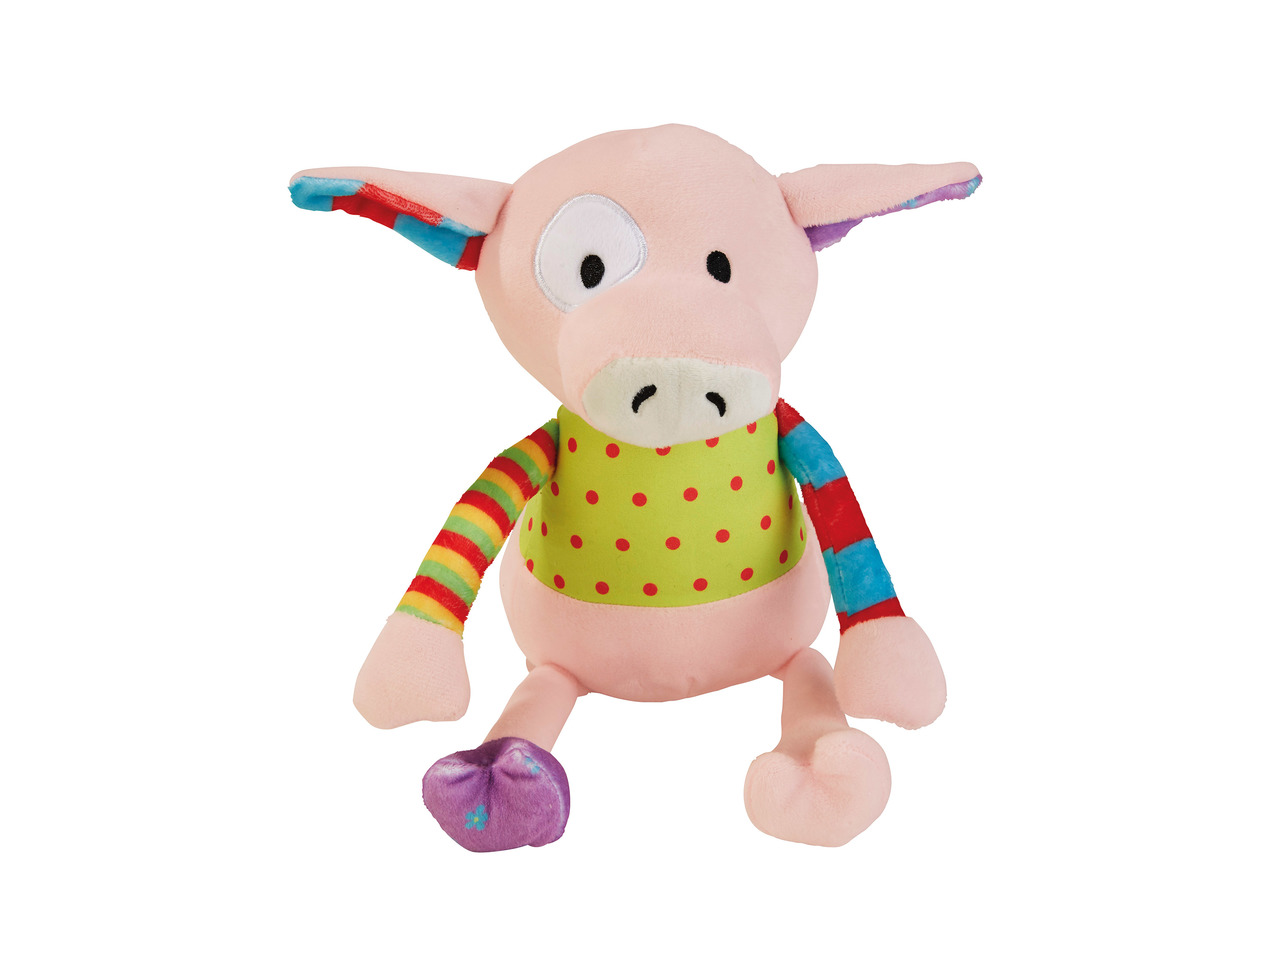 Playtive Junior Plush Animal Toy1